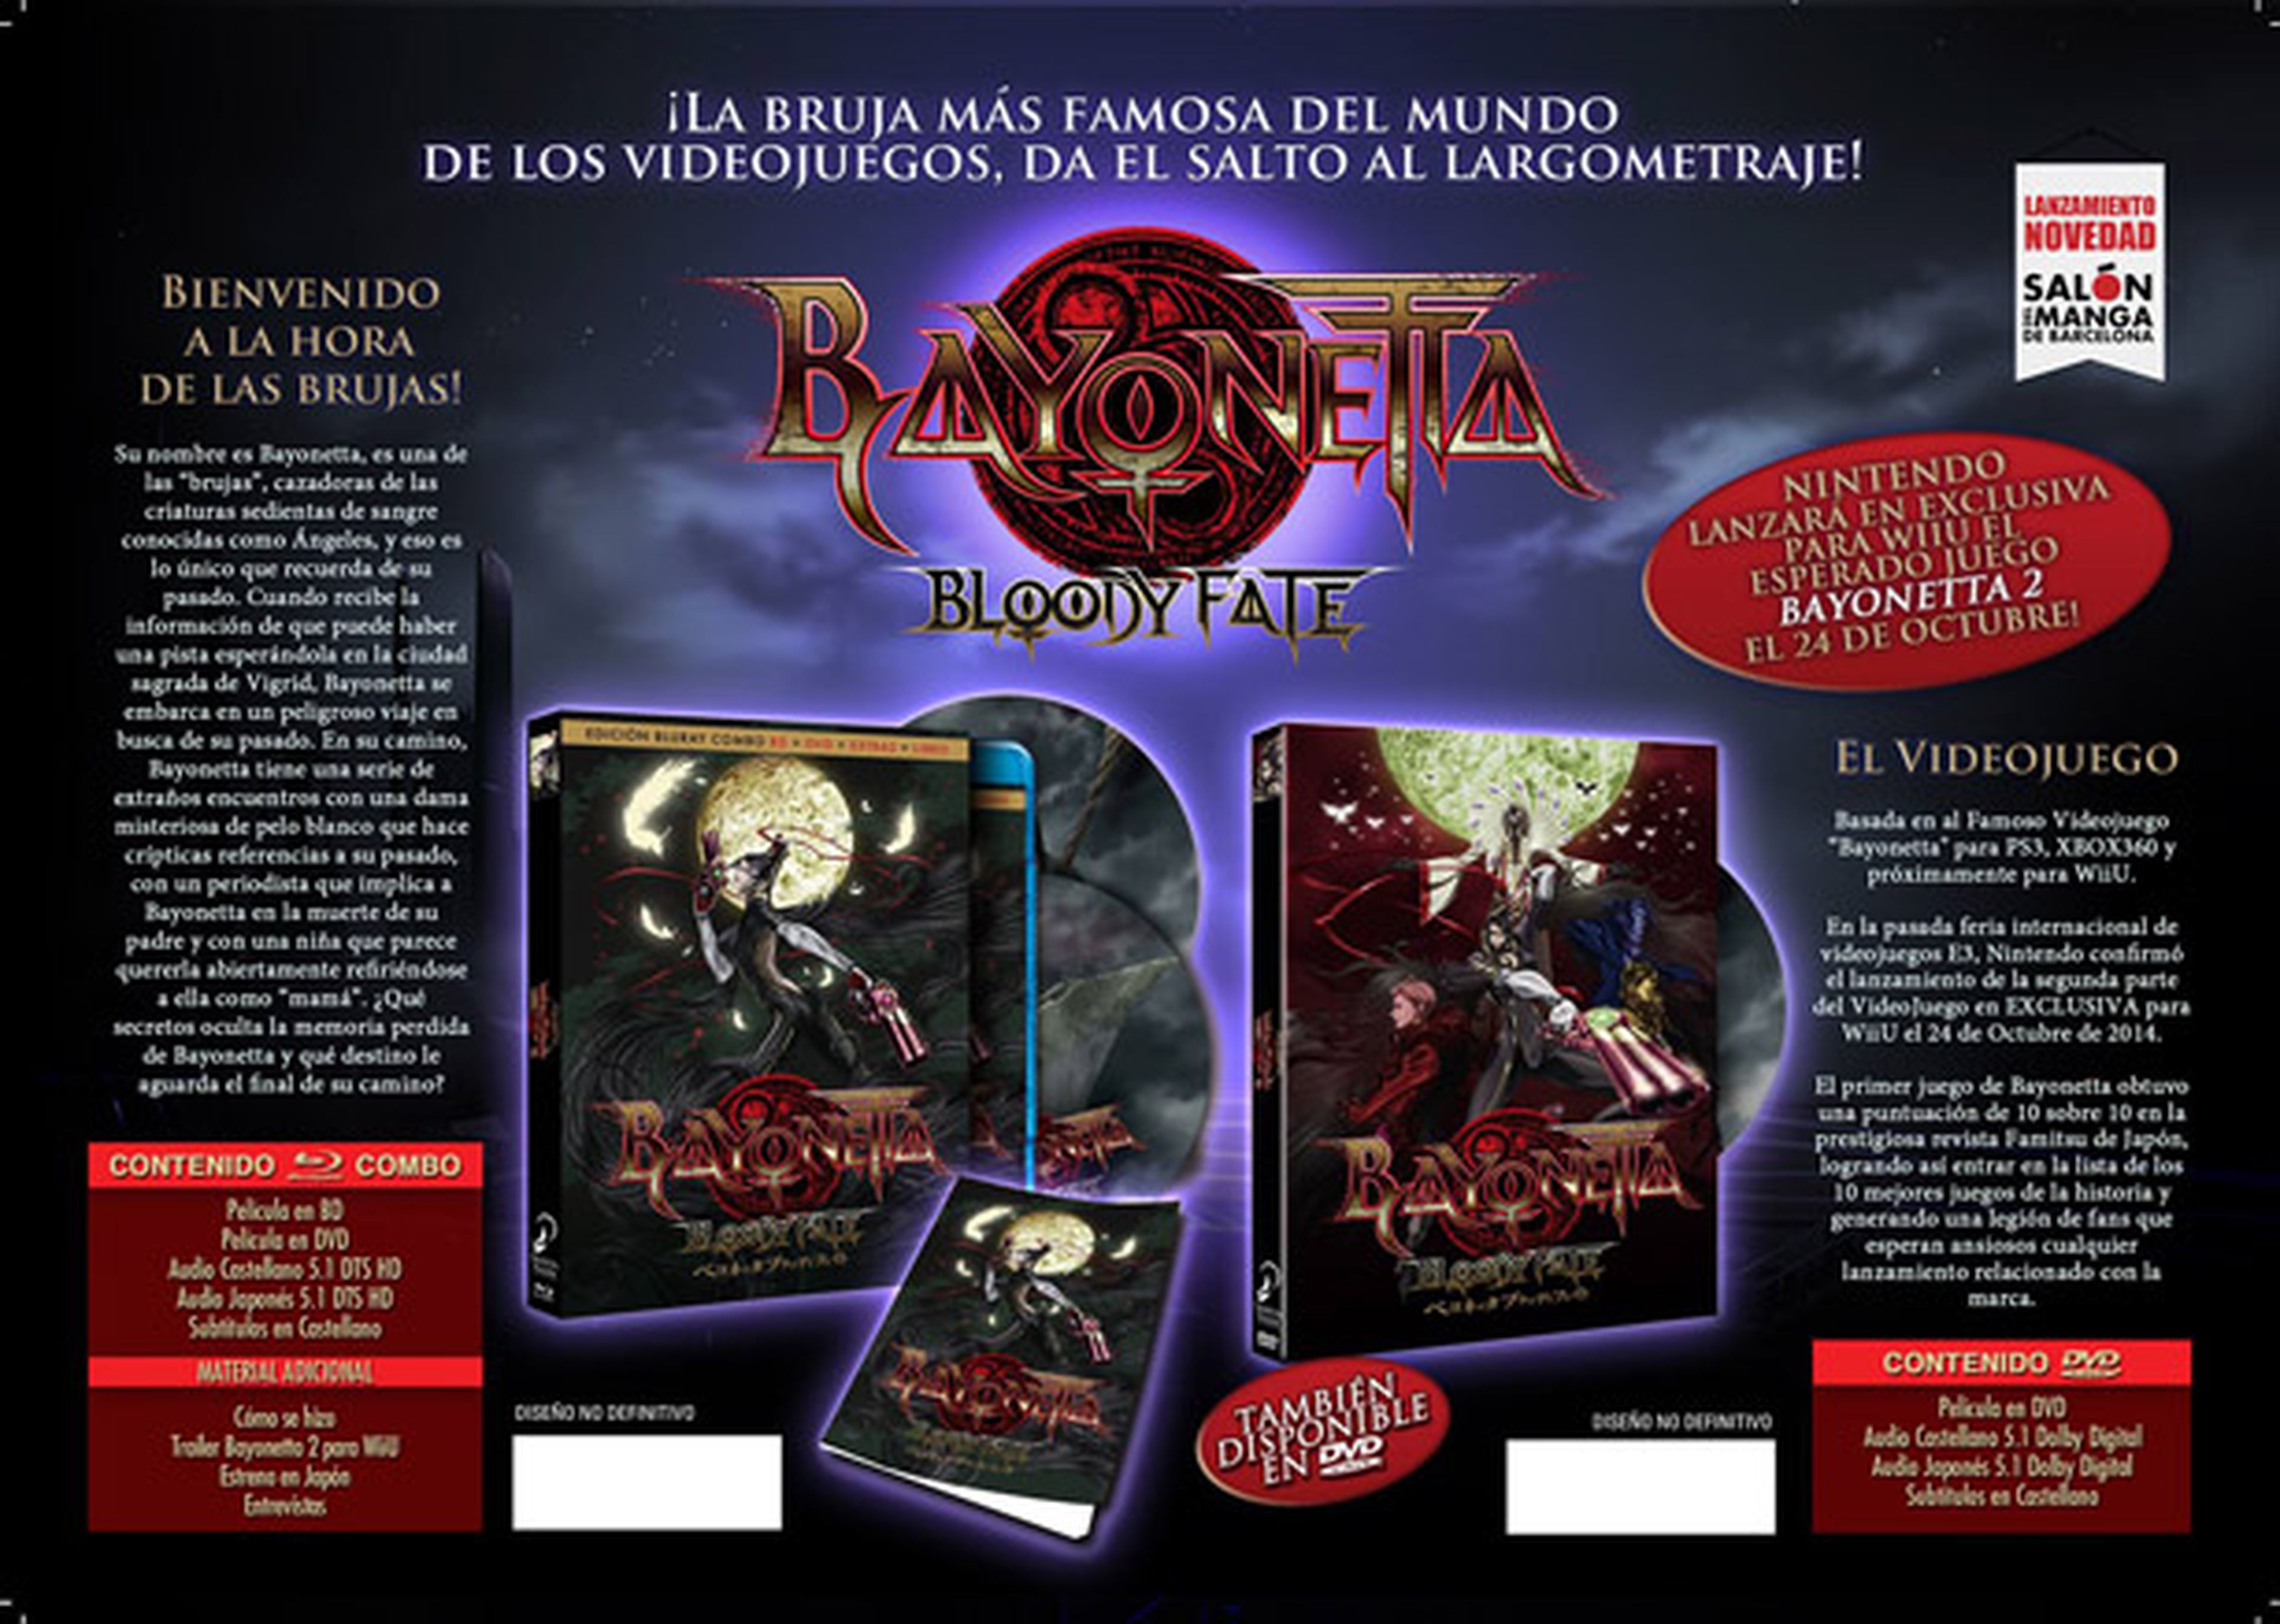 Bayonetta: Bloody Fate, licenciada en España